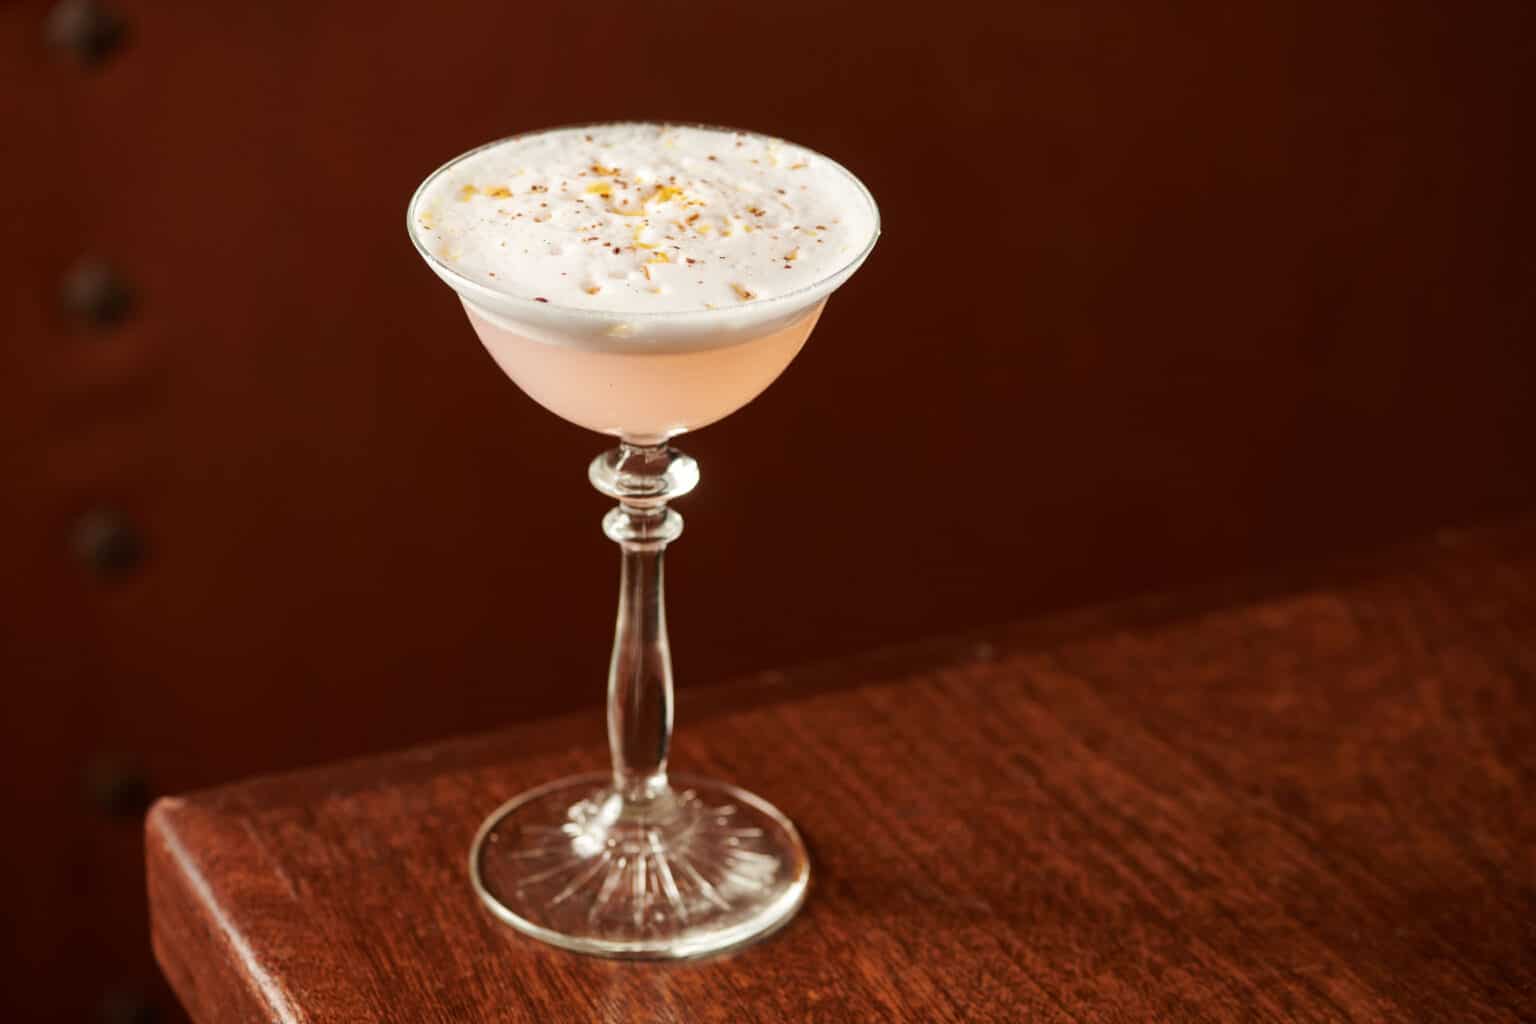 A cardamom blossom cocktail